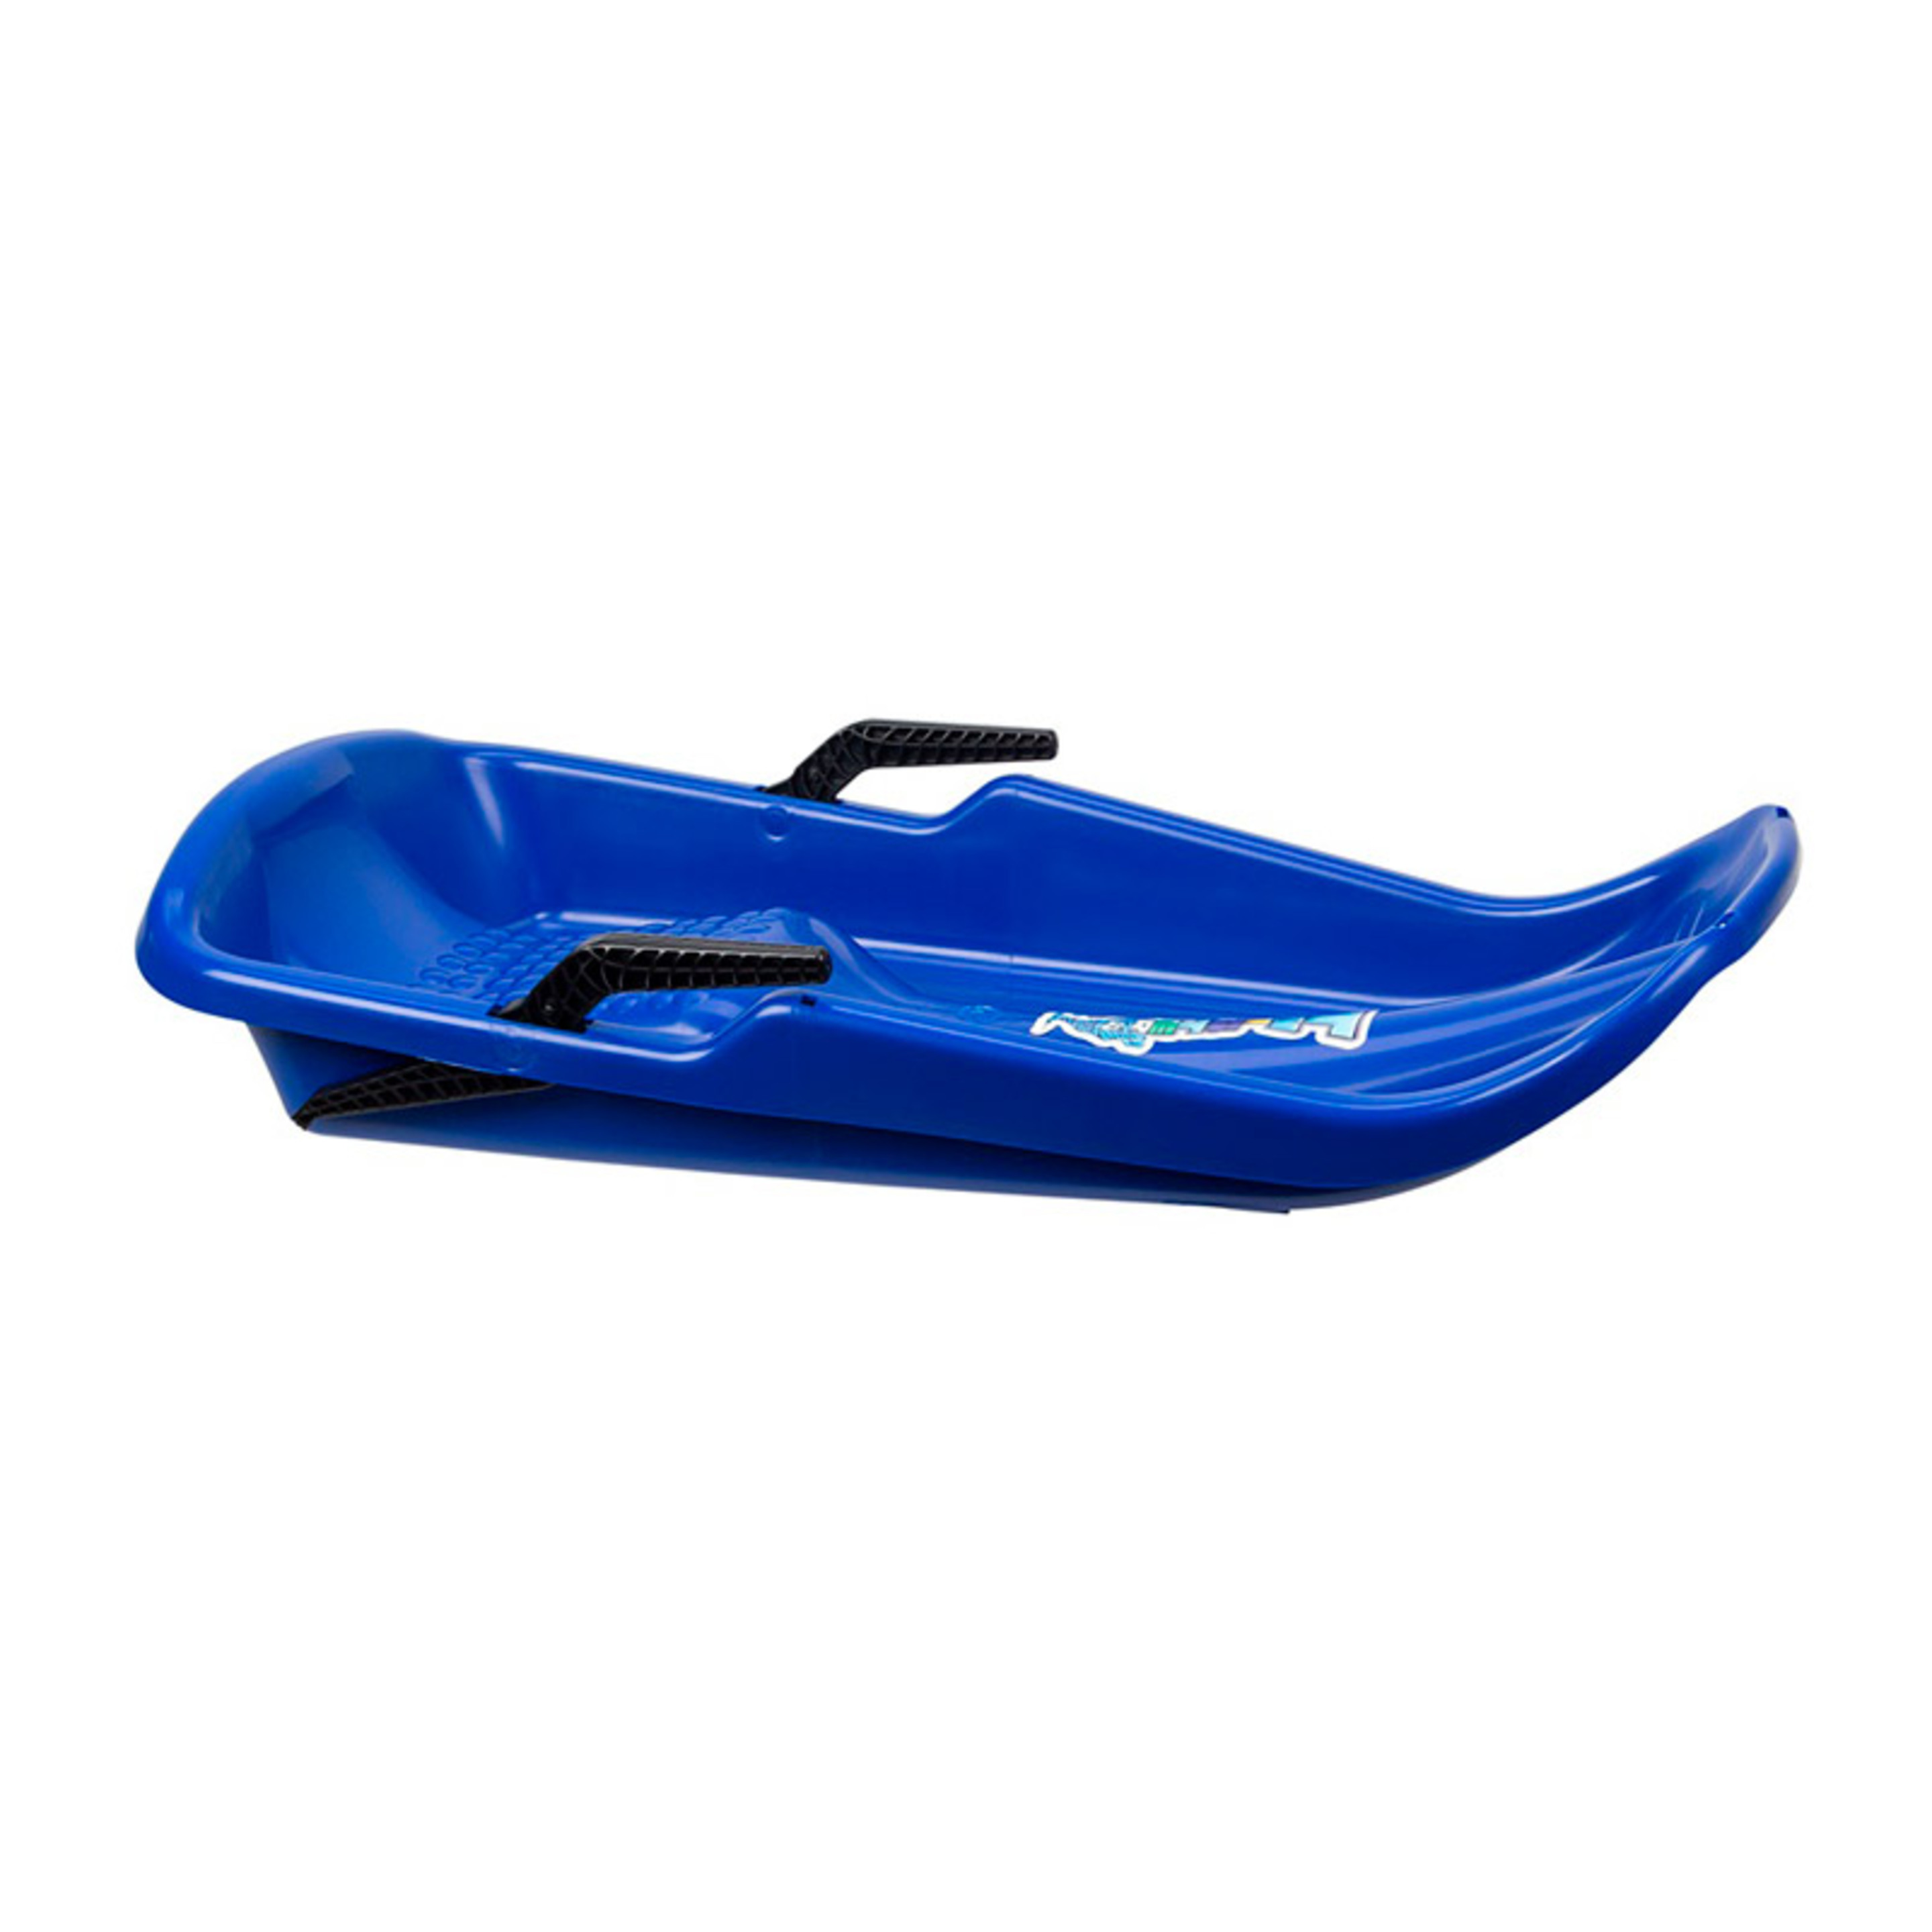 Sr Di Getandgo Trineo Plastico Twister Azul - azul - 